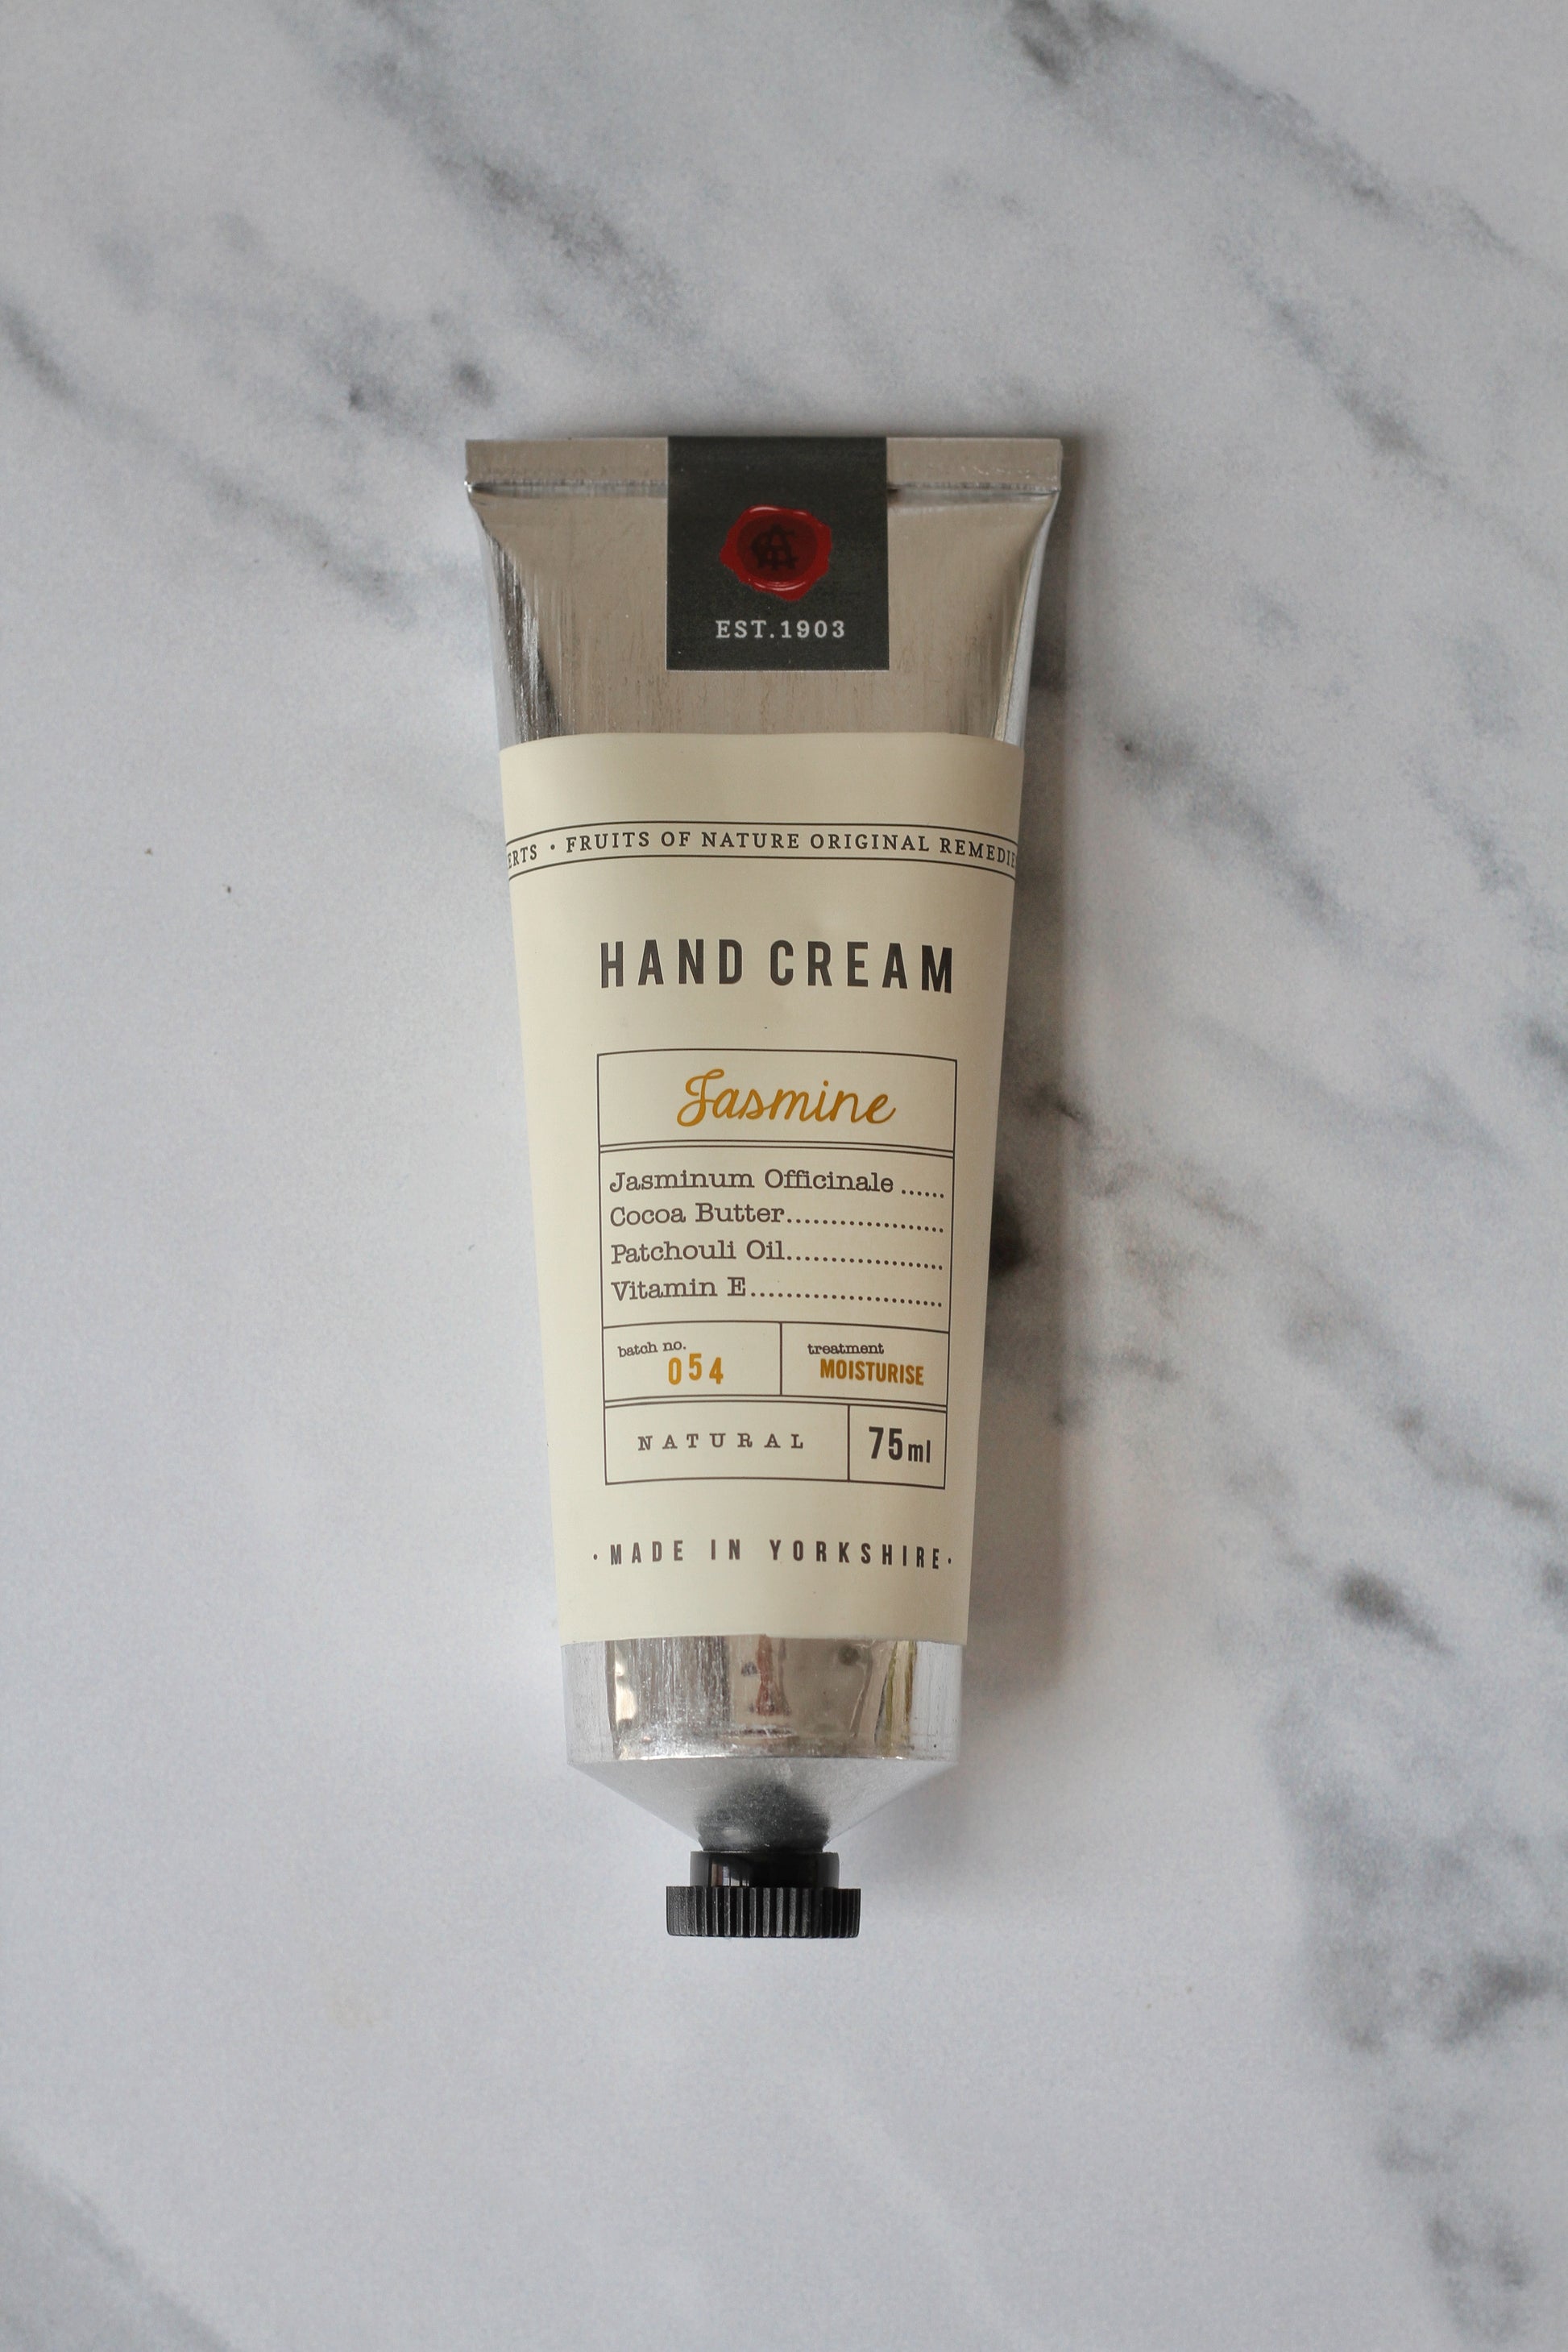 Jasmine scented hand cream